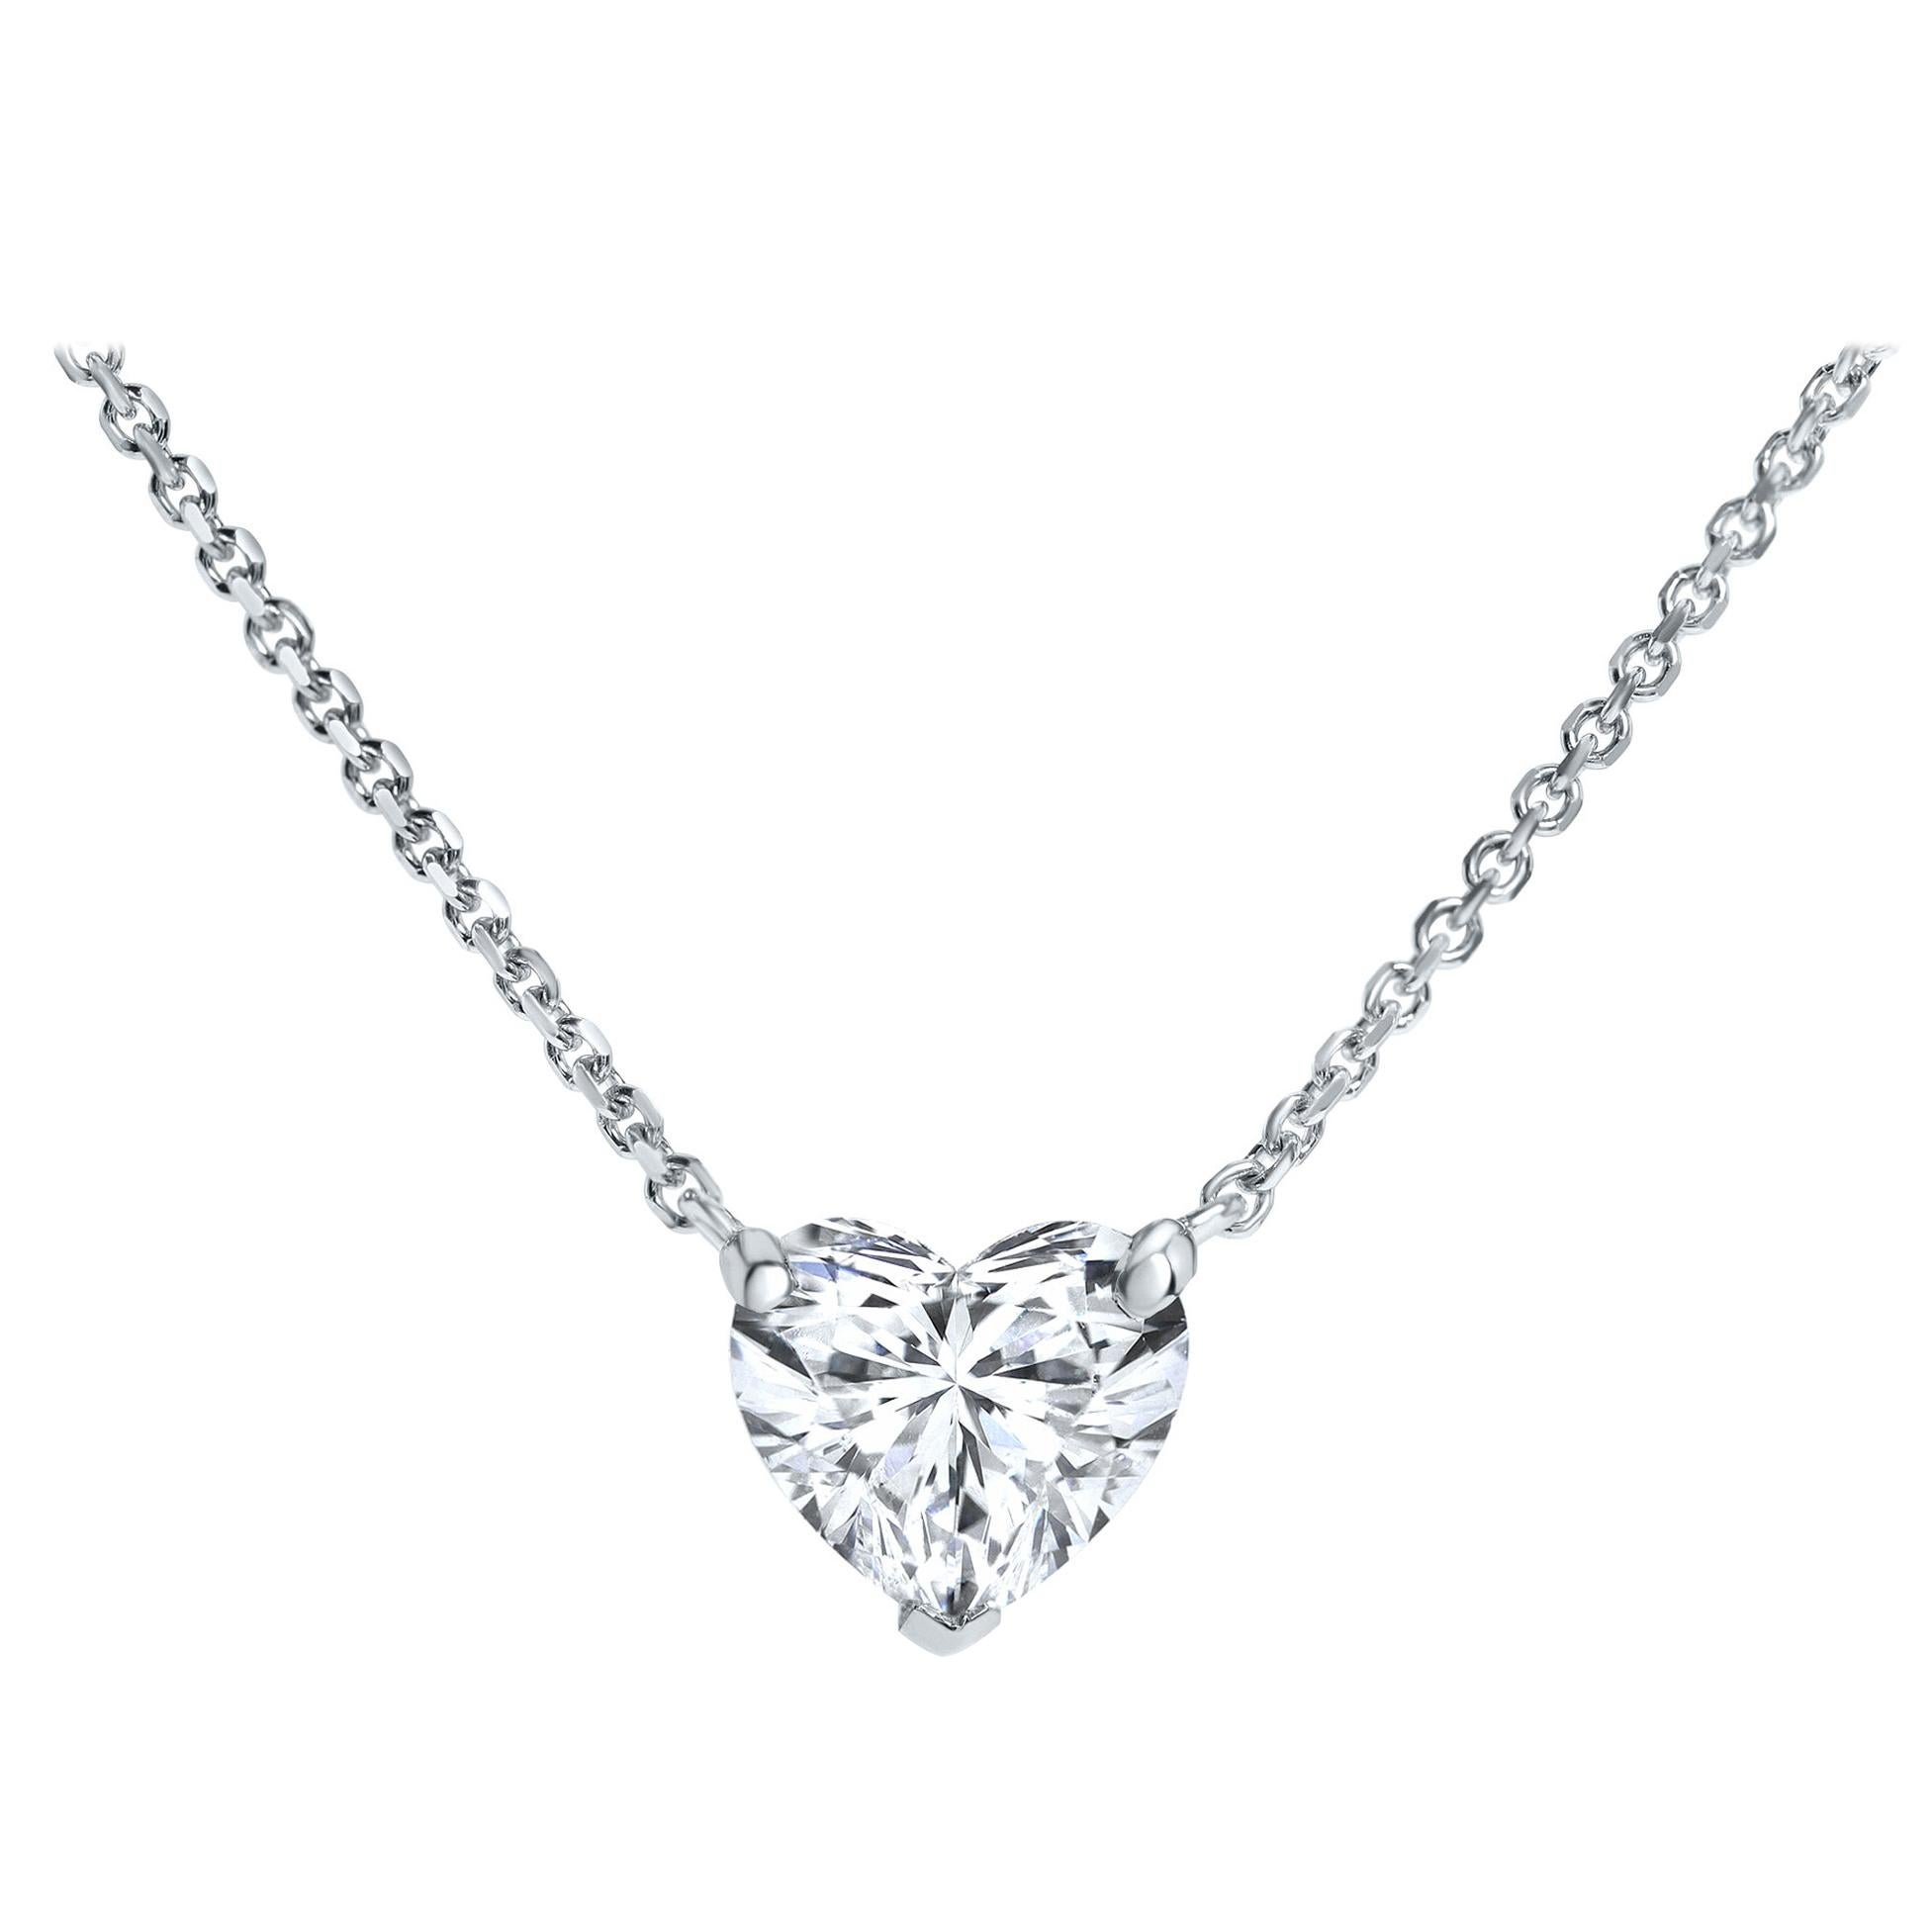 0.70 Carat Heart Shaped Diamond Pendant in 14 Karat White Gold, Shlomit Rogel For Sale